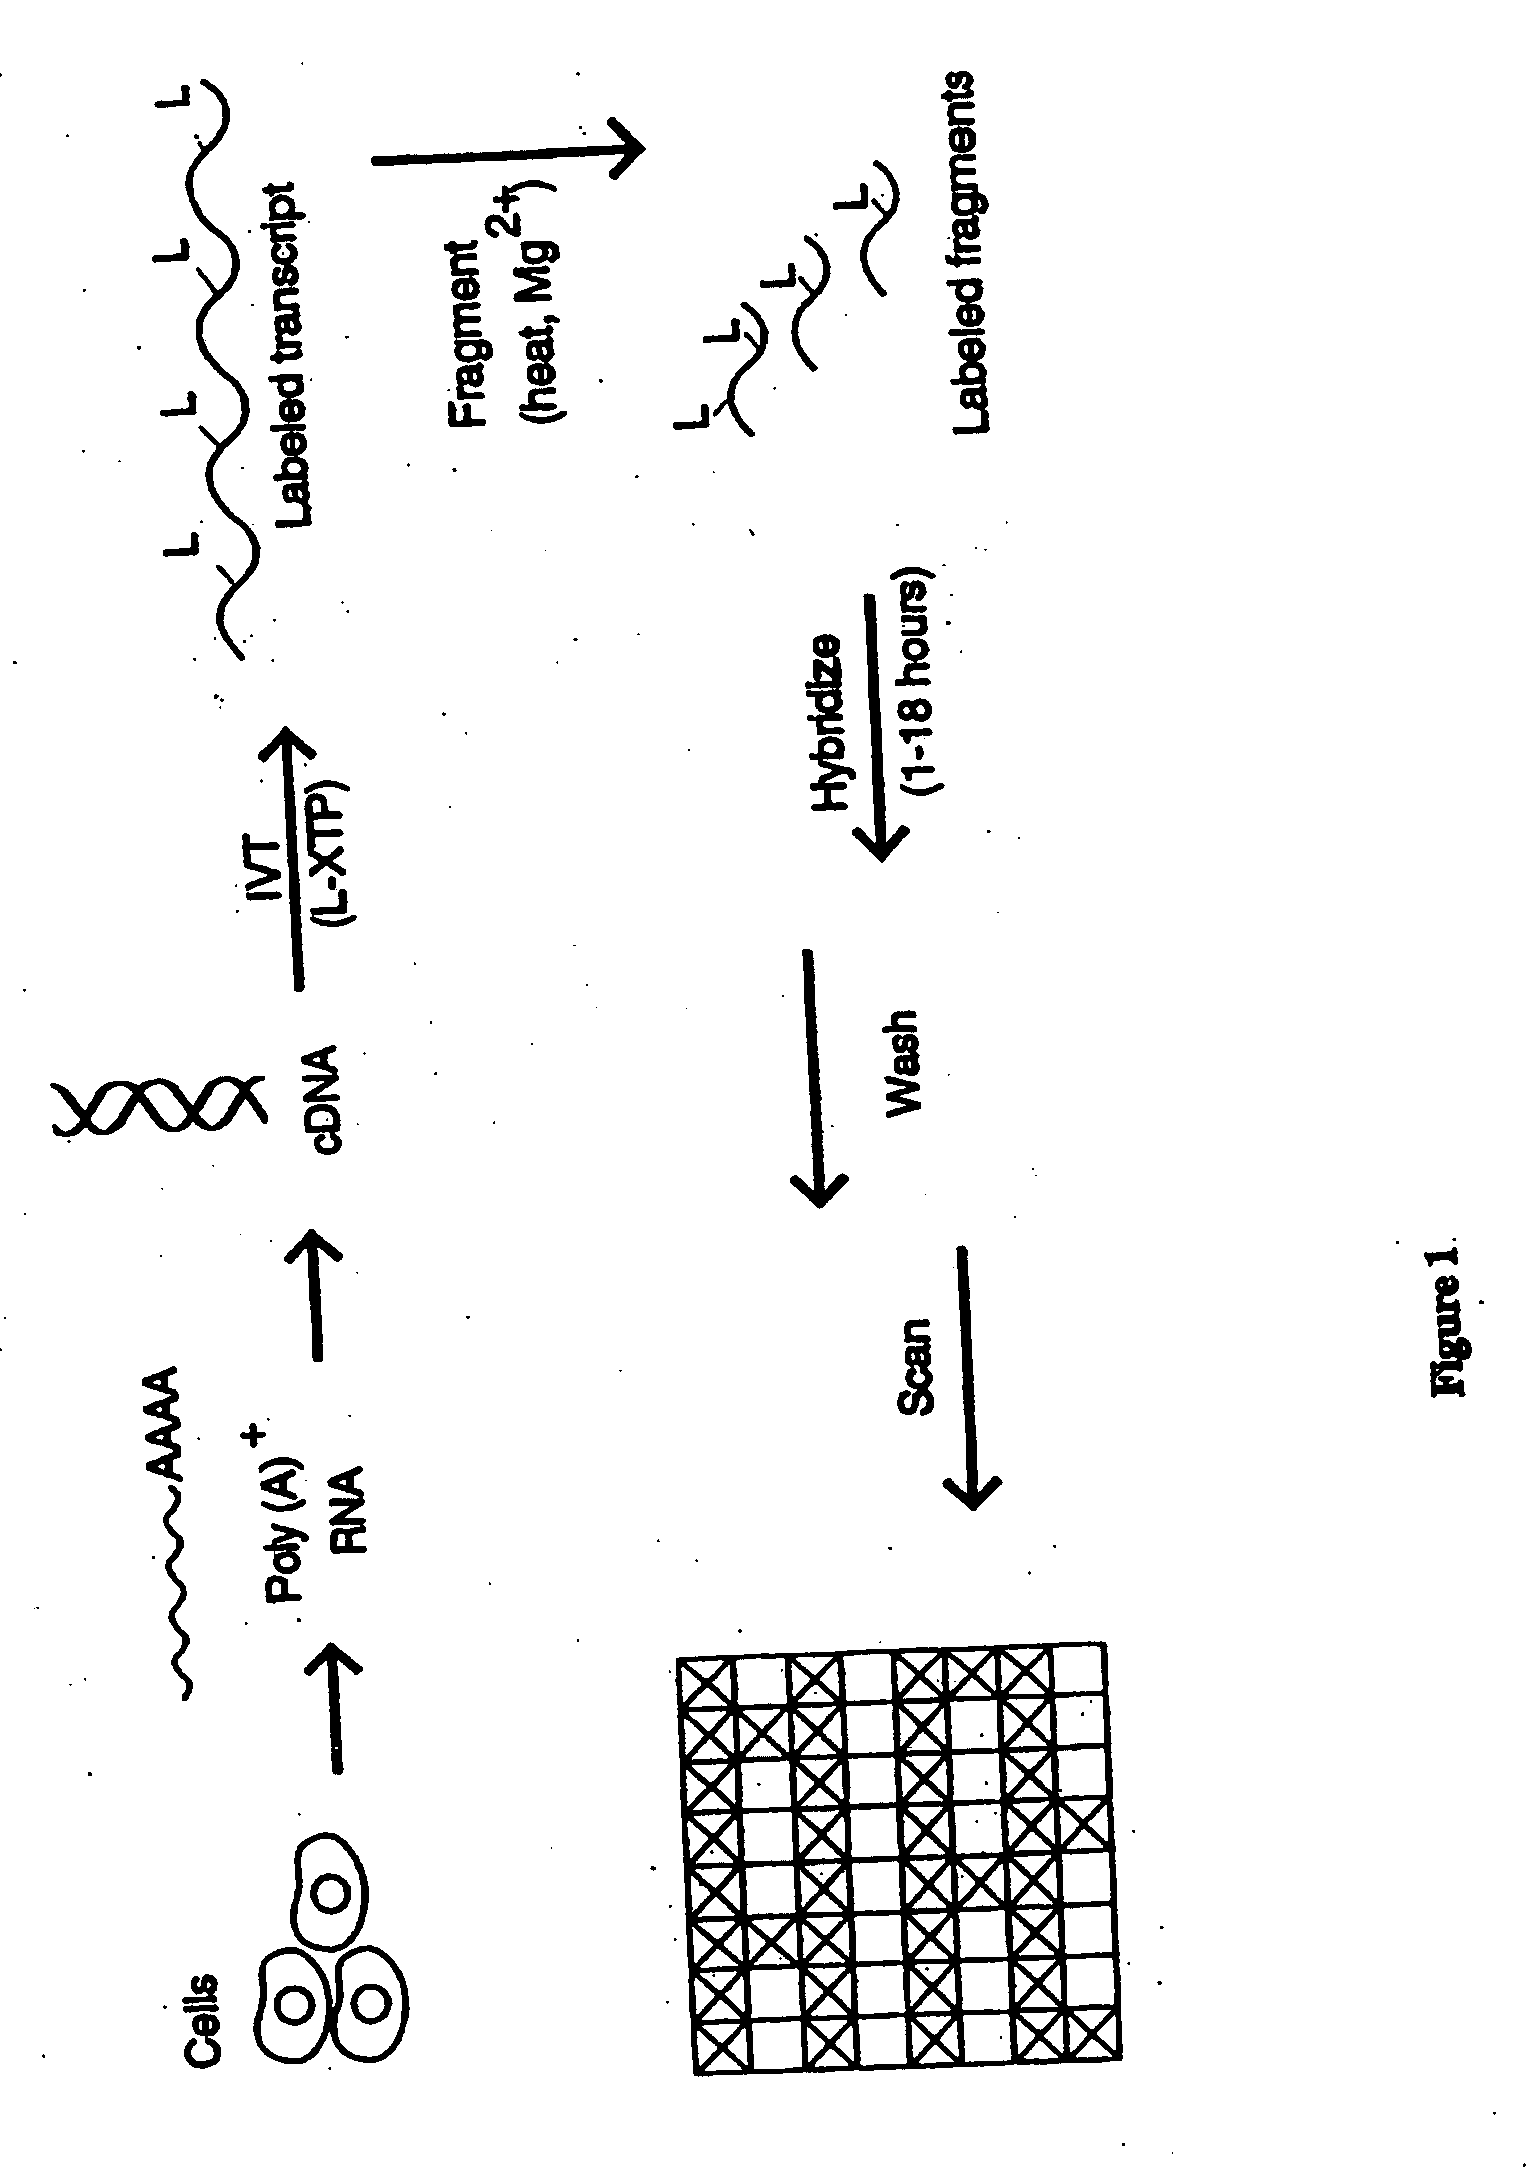 Nucleic acid analysis techniques